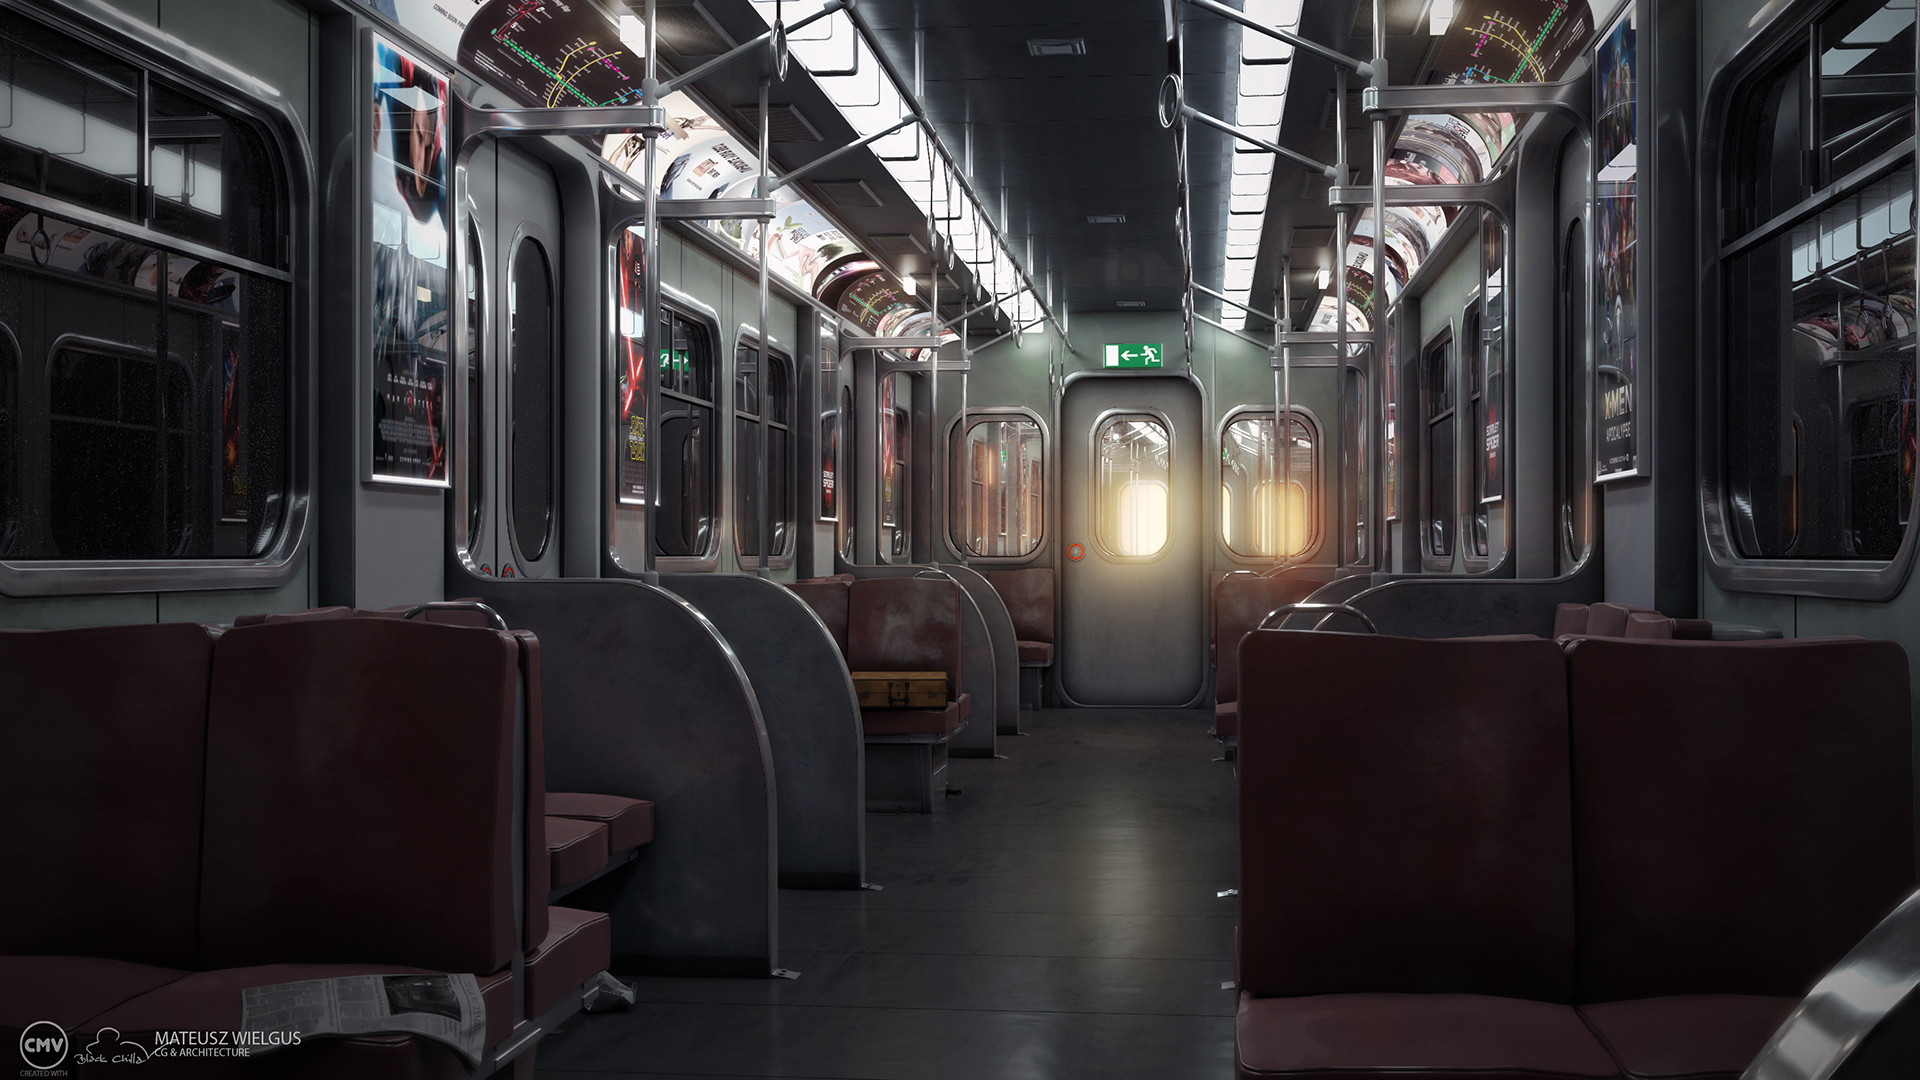 Interior train scene showing generated materials: metal, glass, fabric, paper